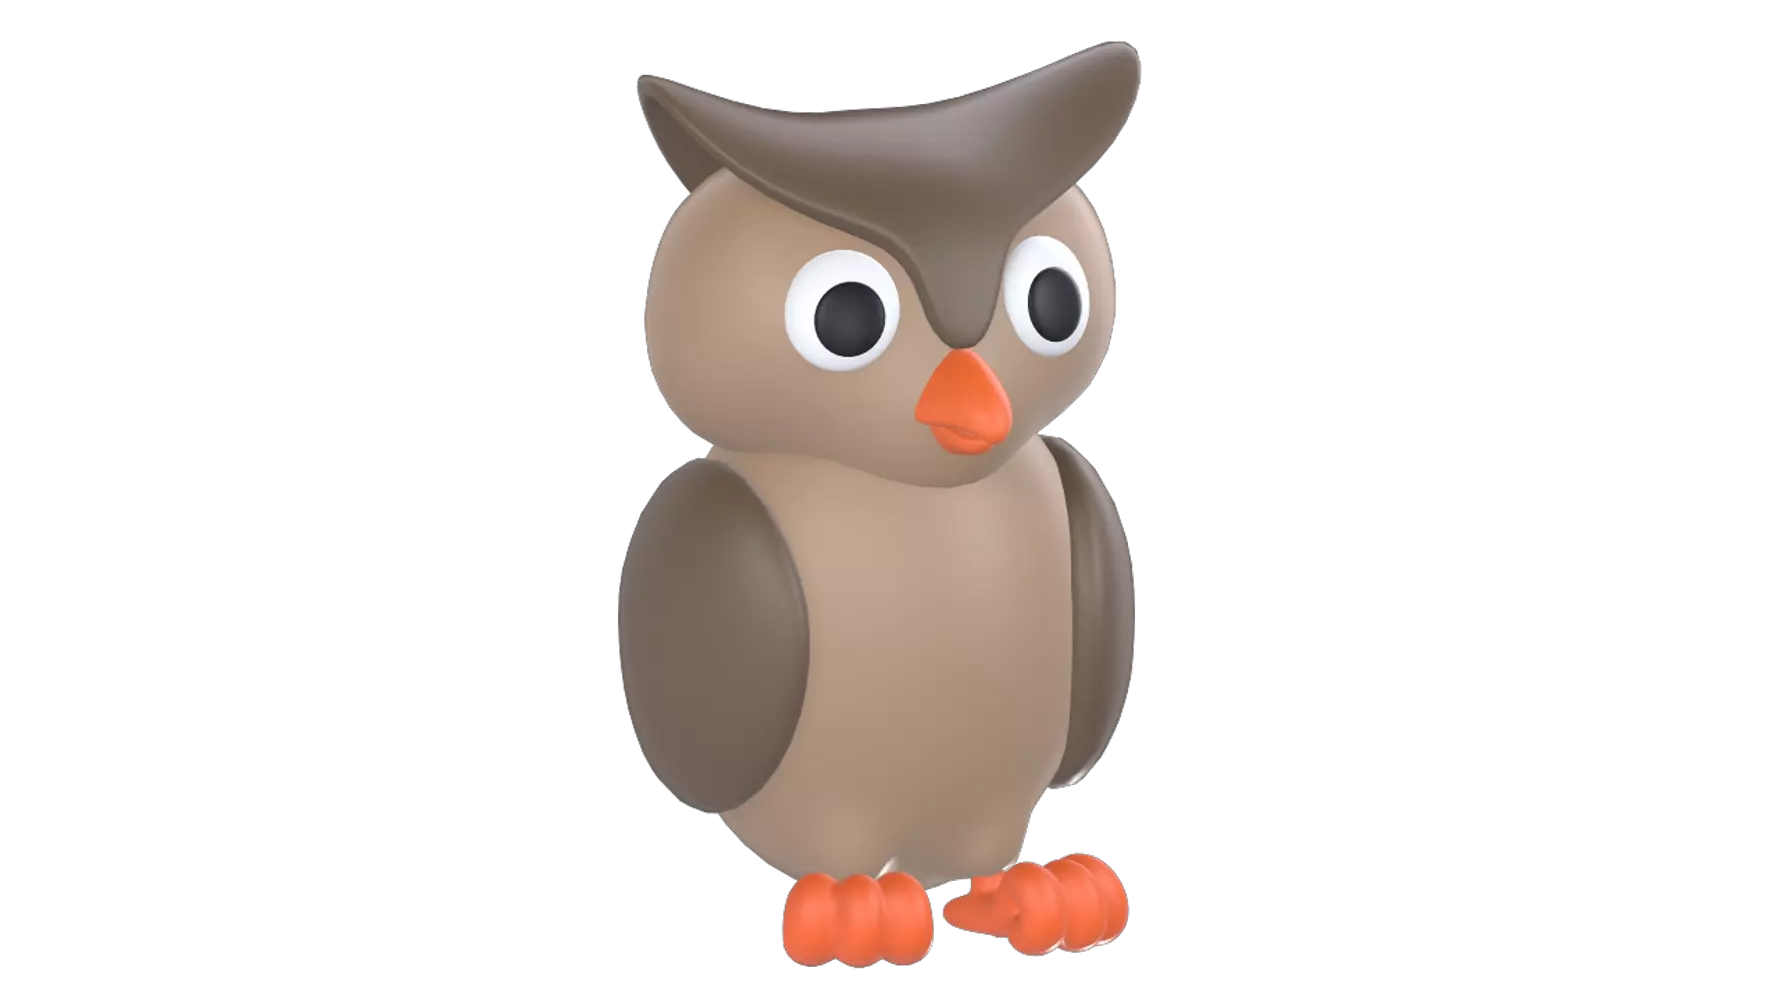 Owl 3D Graphic